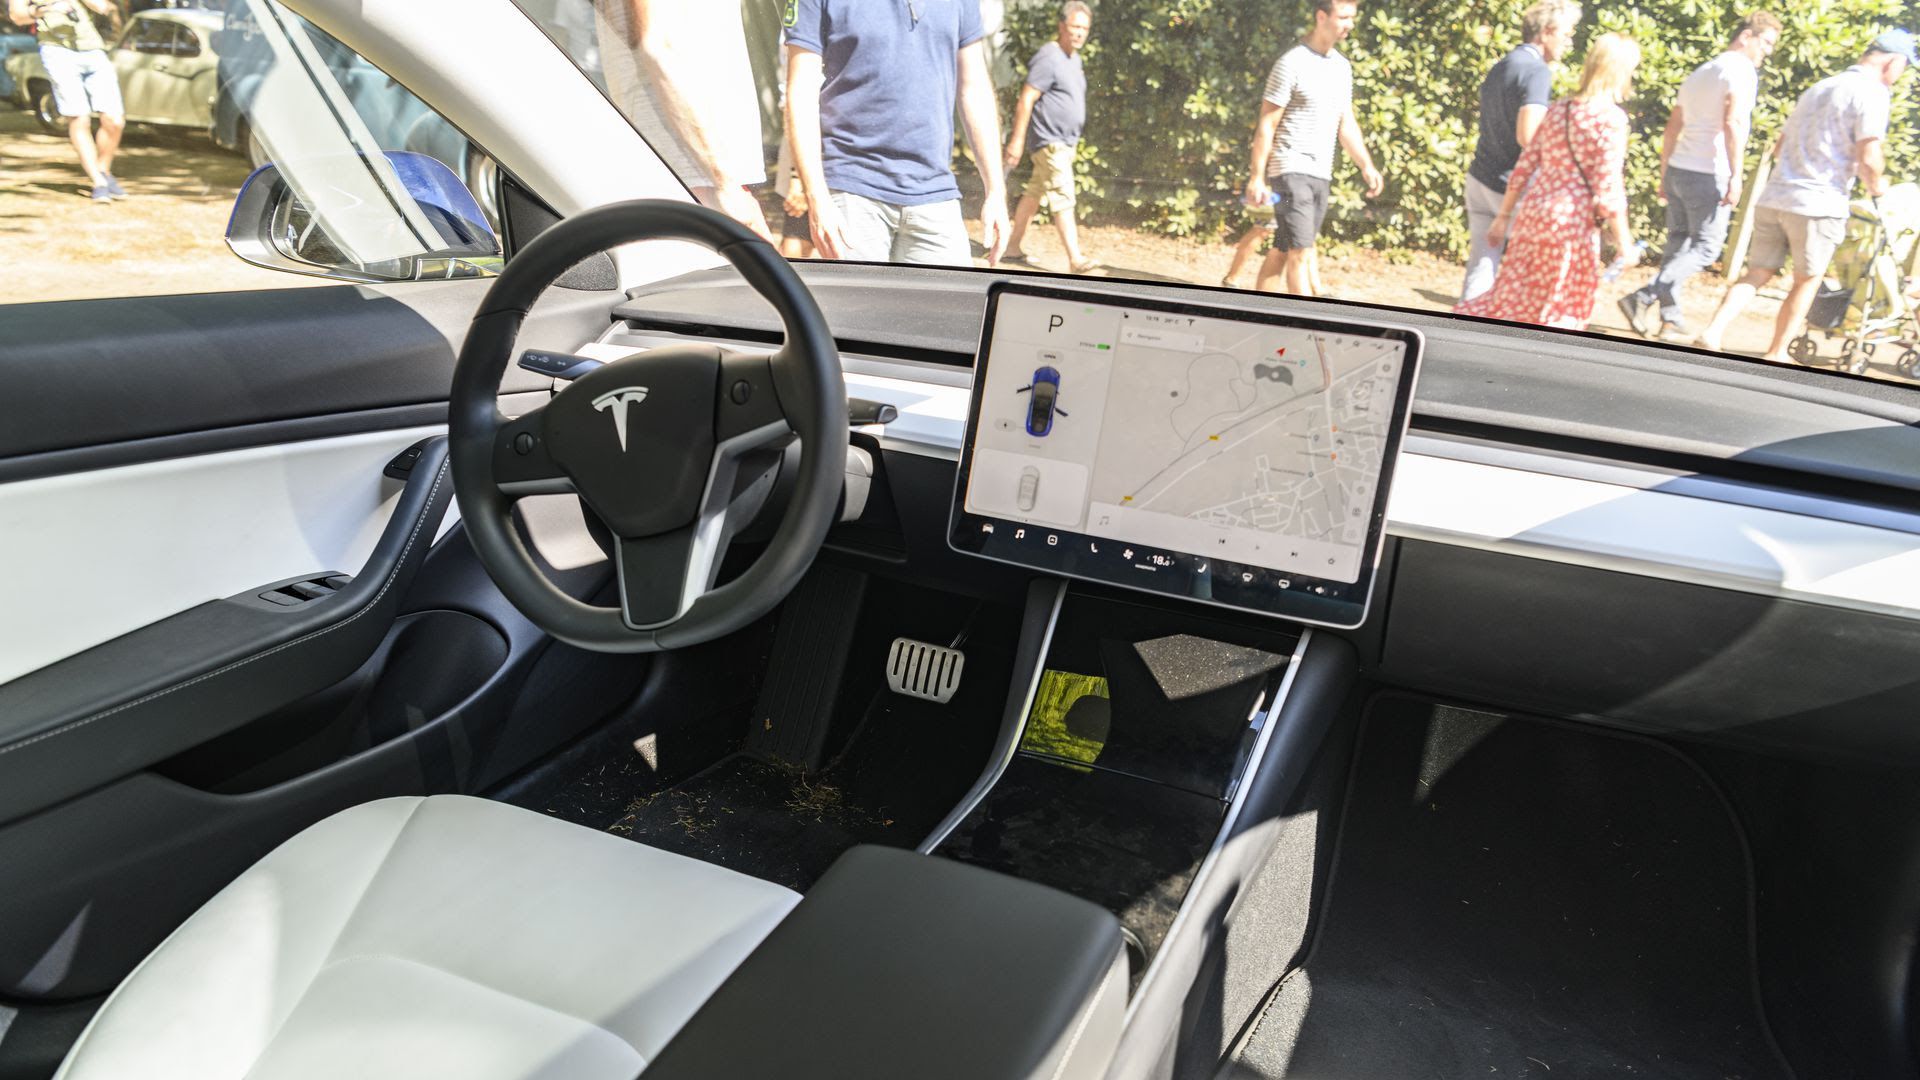 The inside of a Tesla Car.